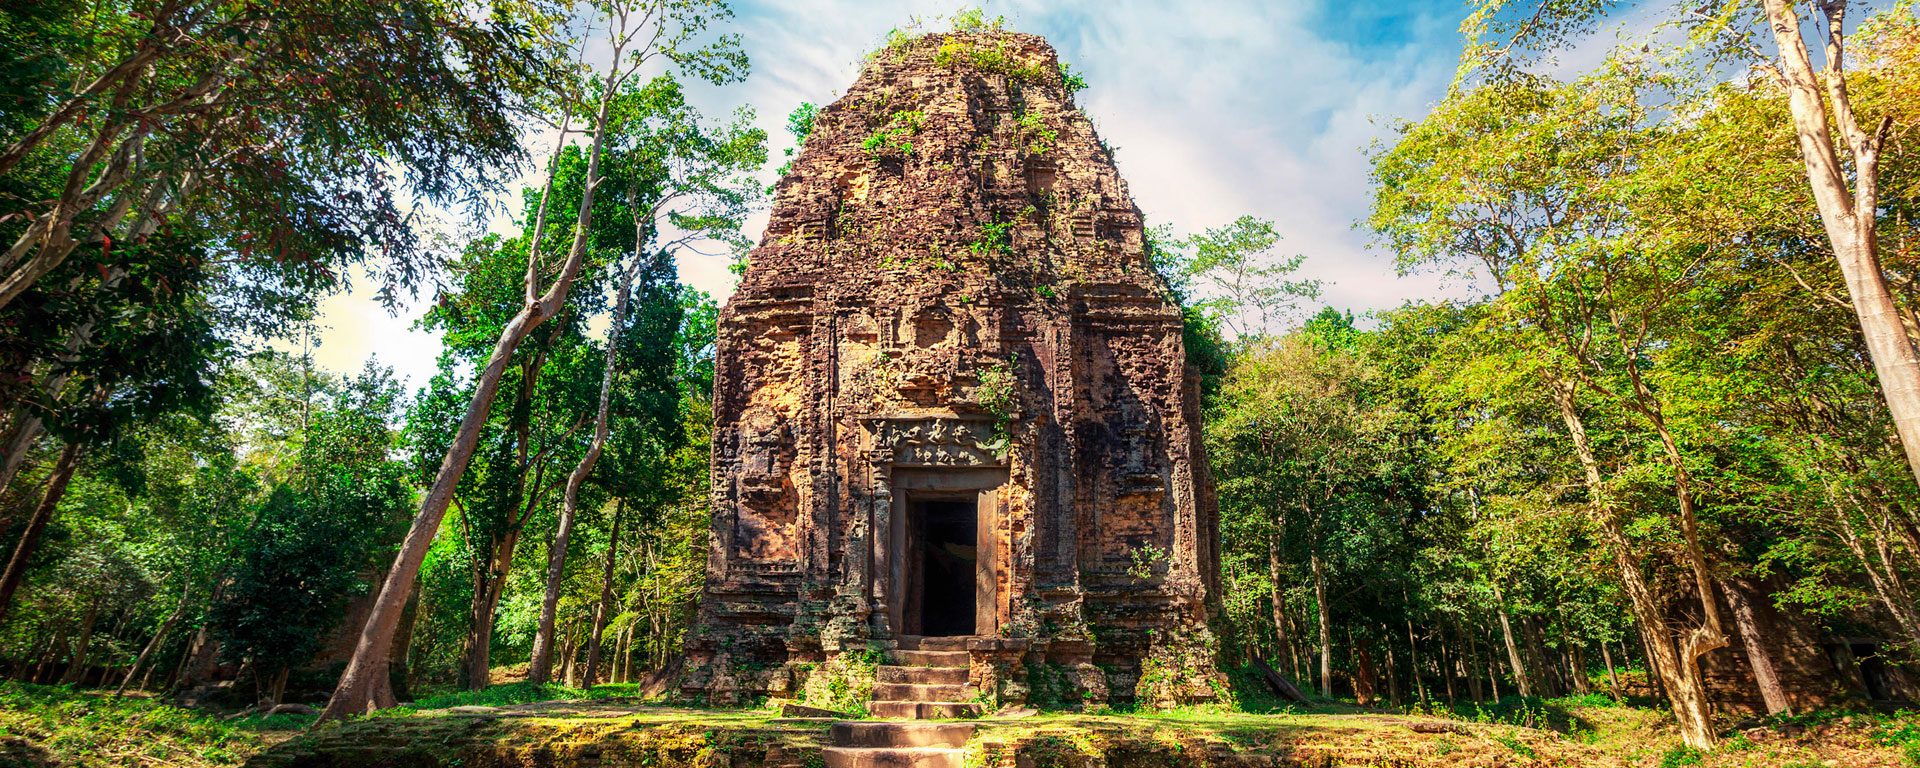 Sambor Prei Kuk temple ruins with giant banyan trees, Kampong Thom, Cambodia